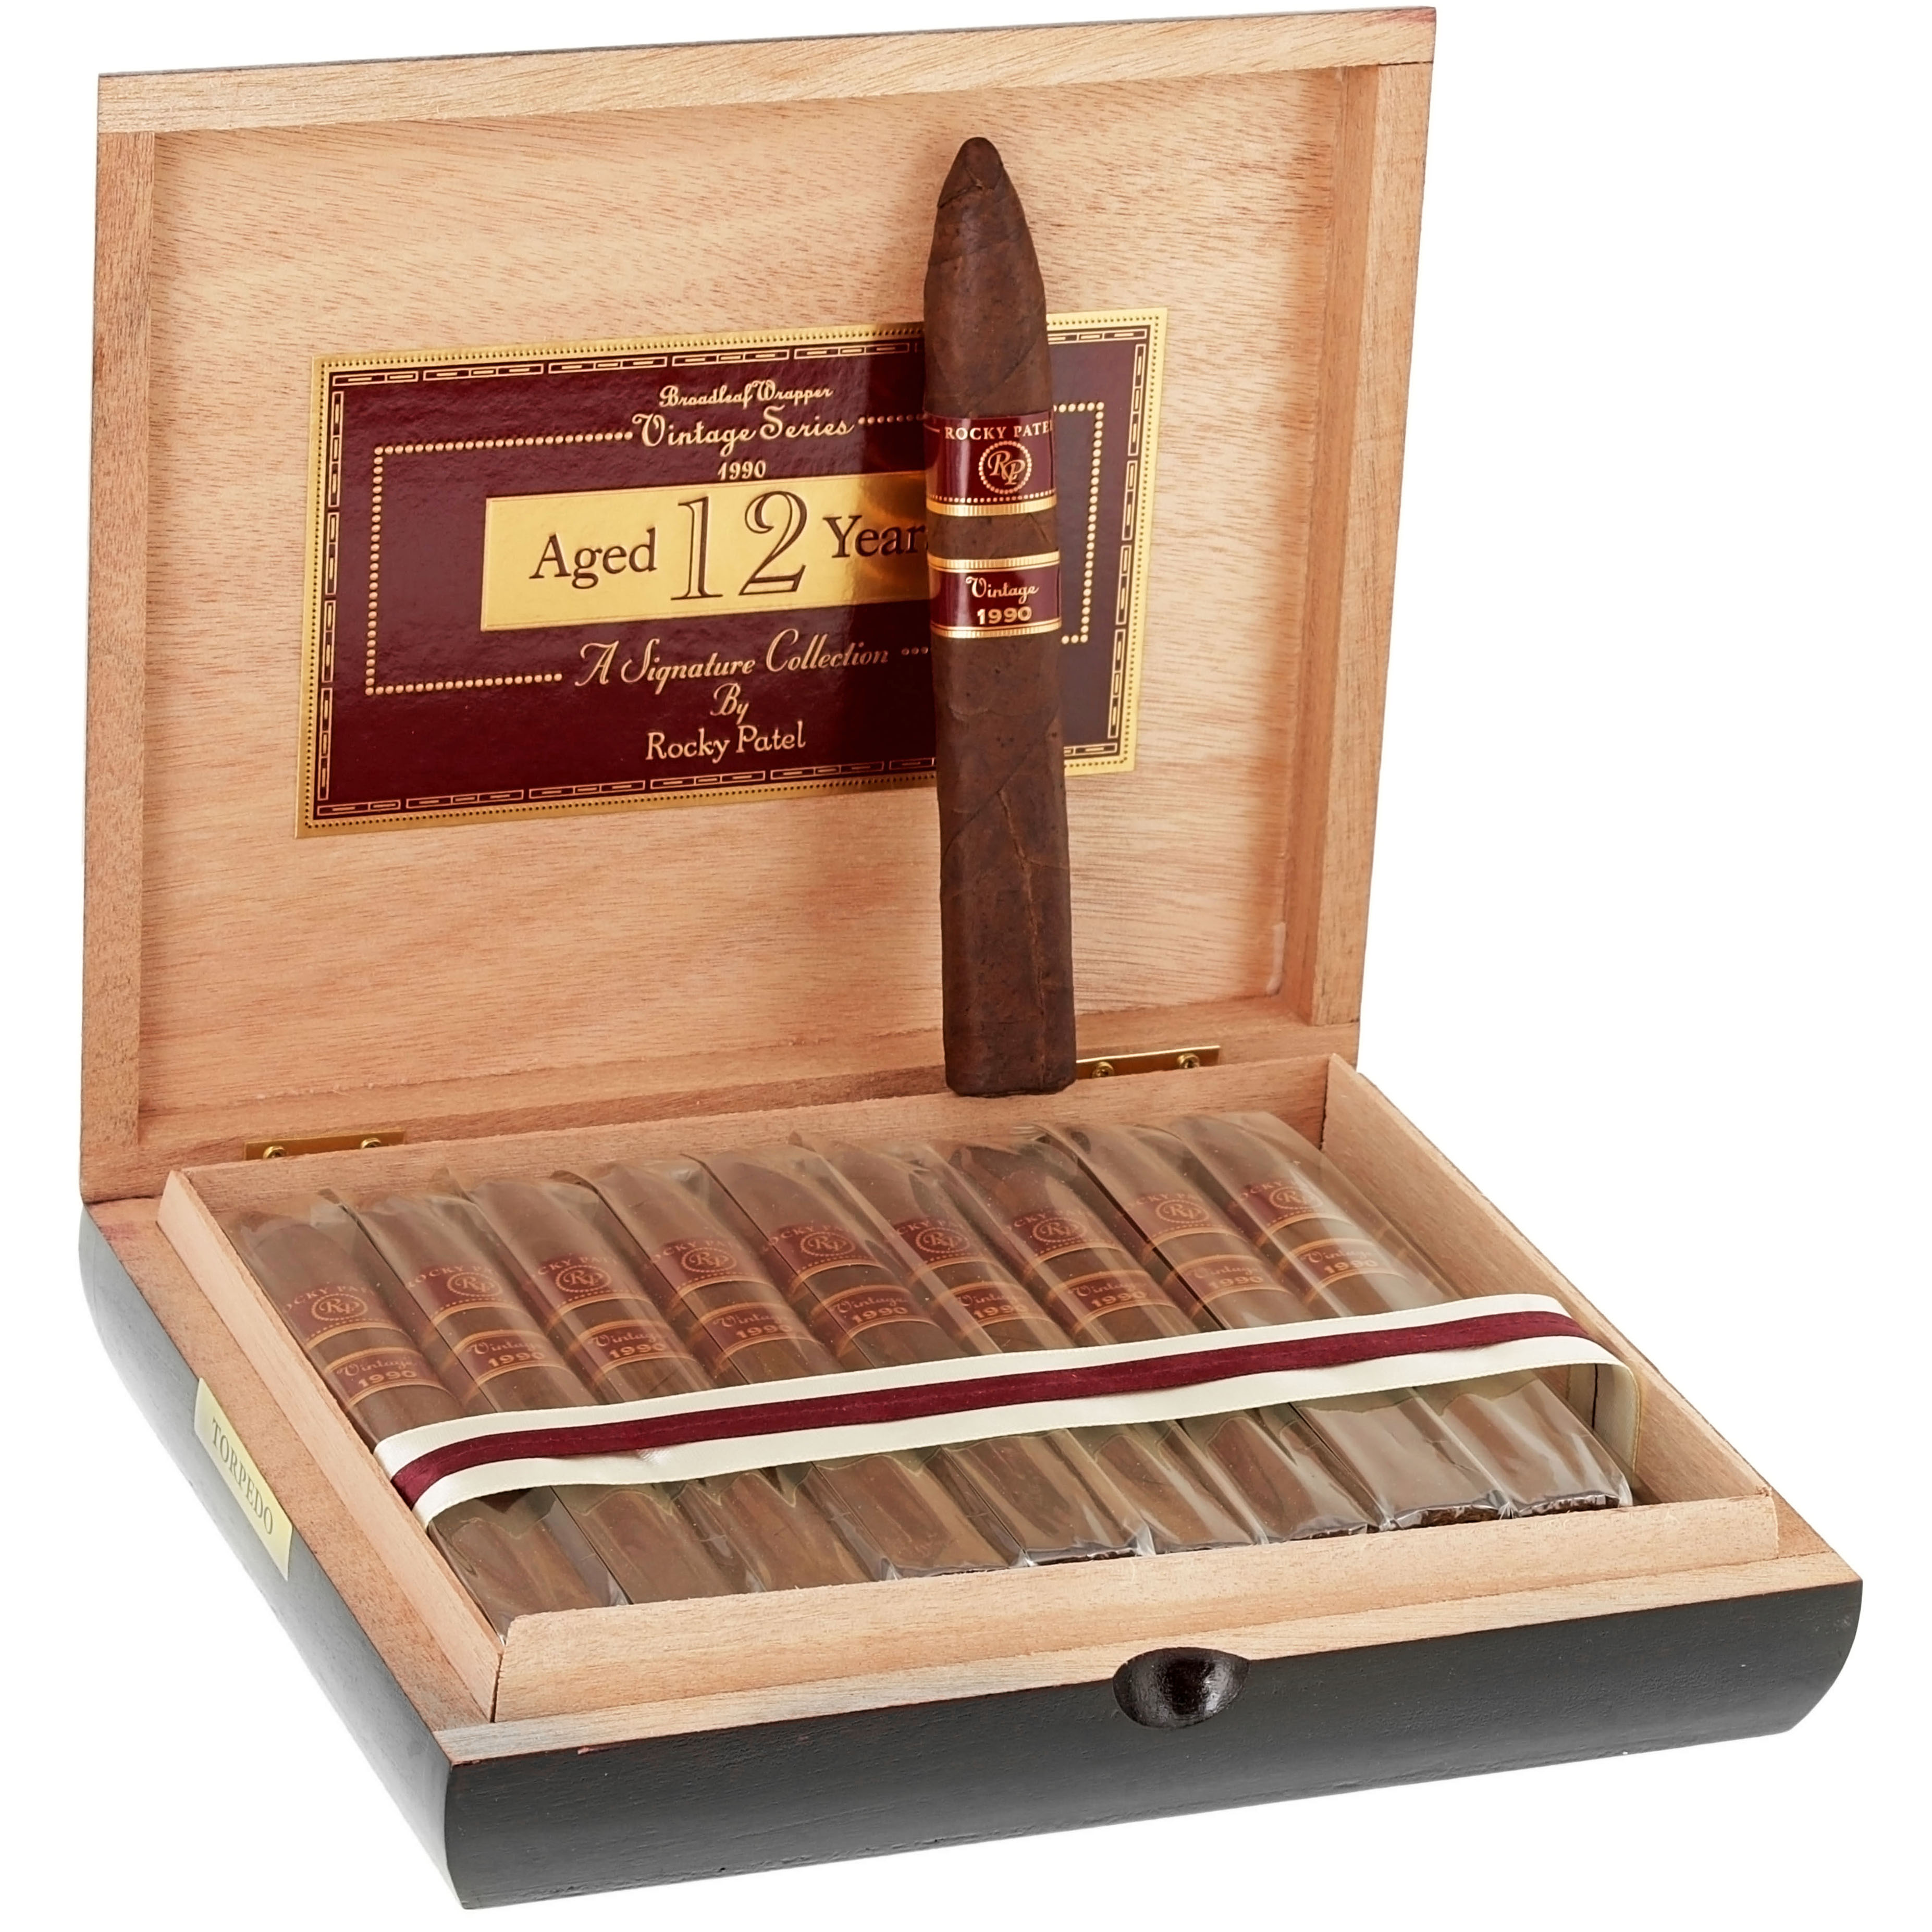 ROCKY PATEL "VINTAGE SERIES" 1990 AGED 12 YEARS  TORPEDO Wooden Cigar Box 